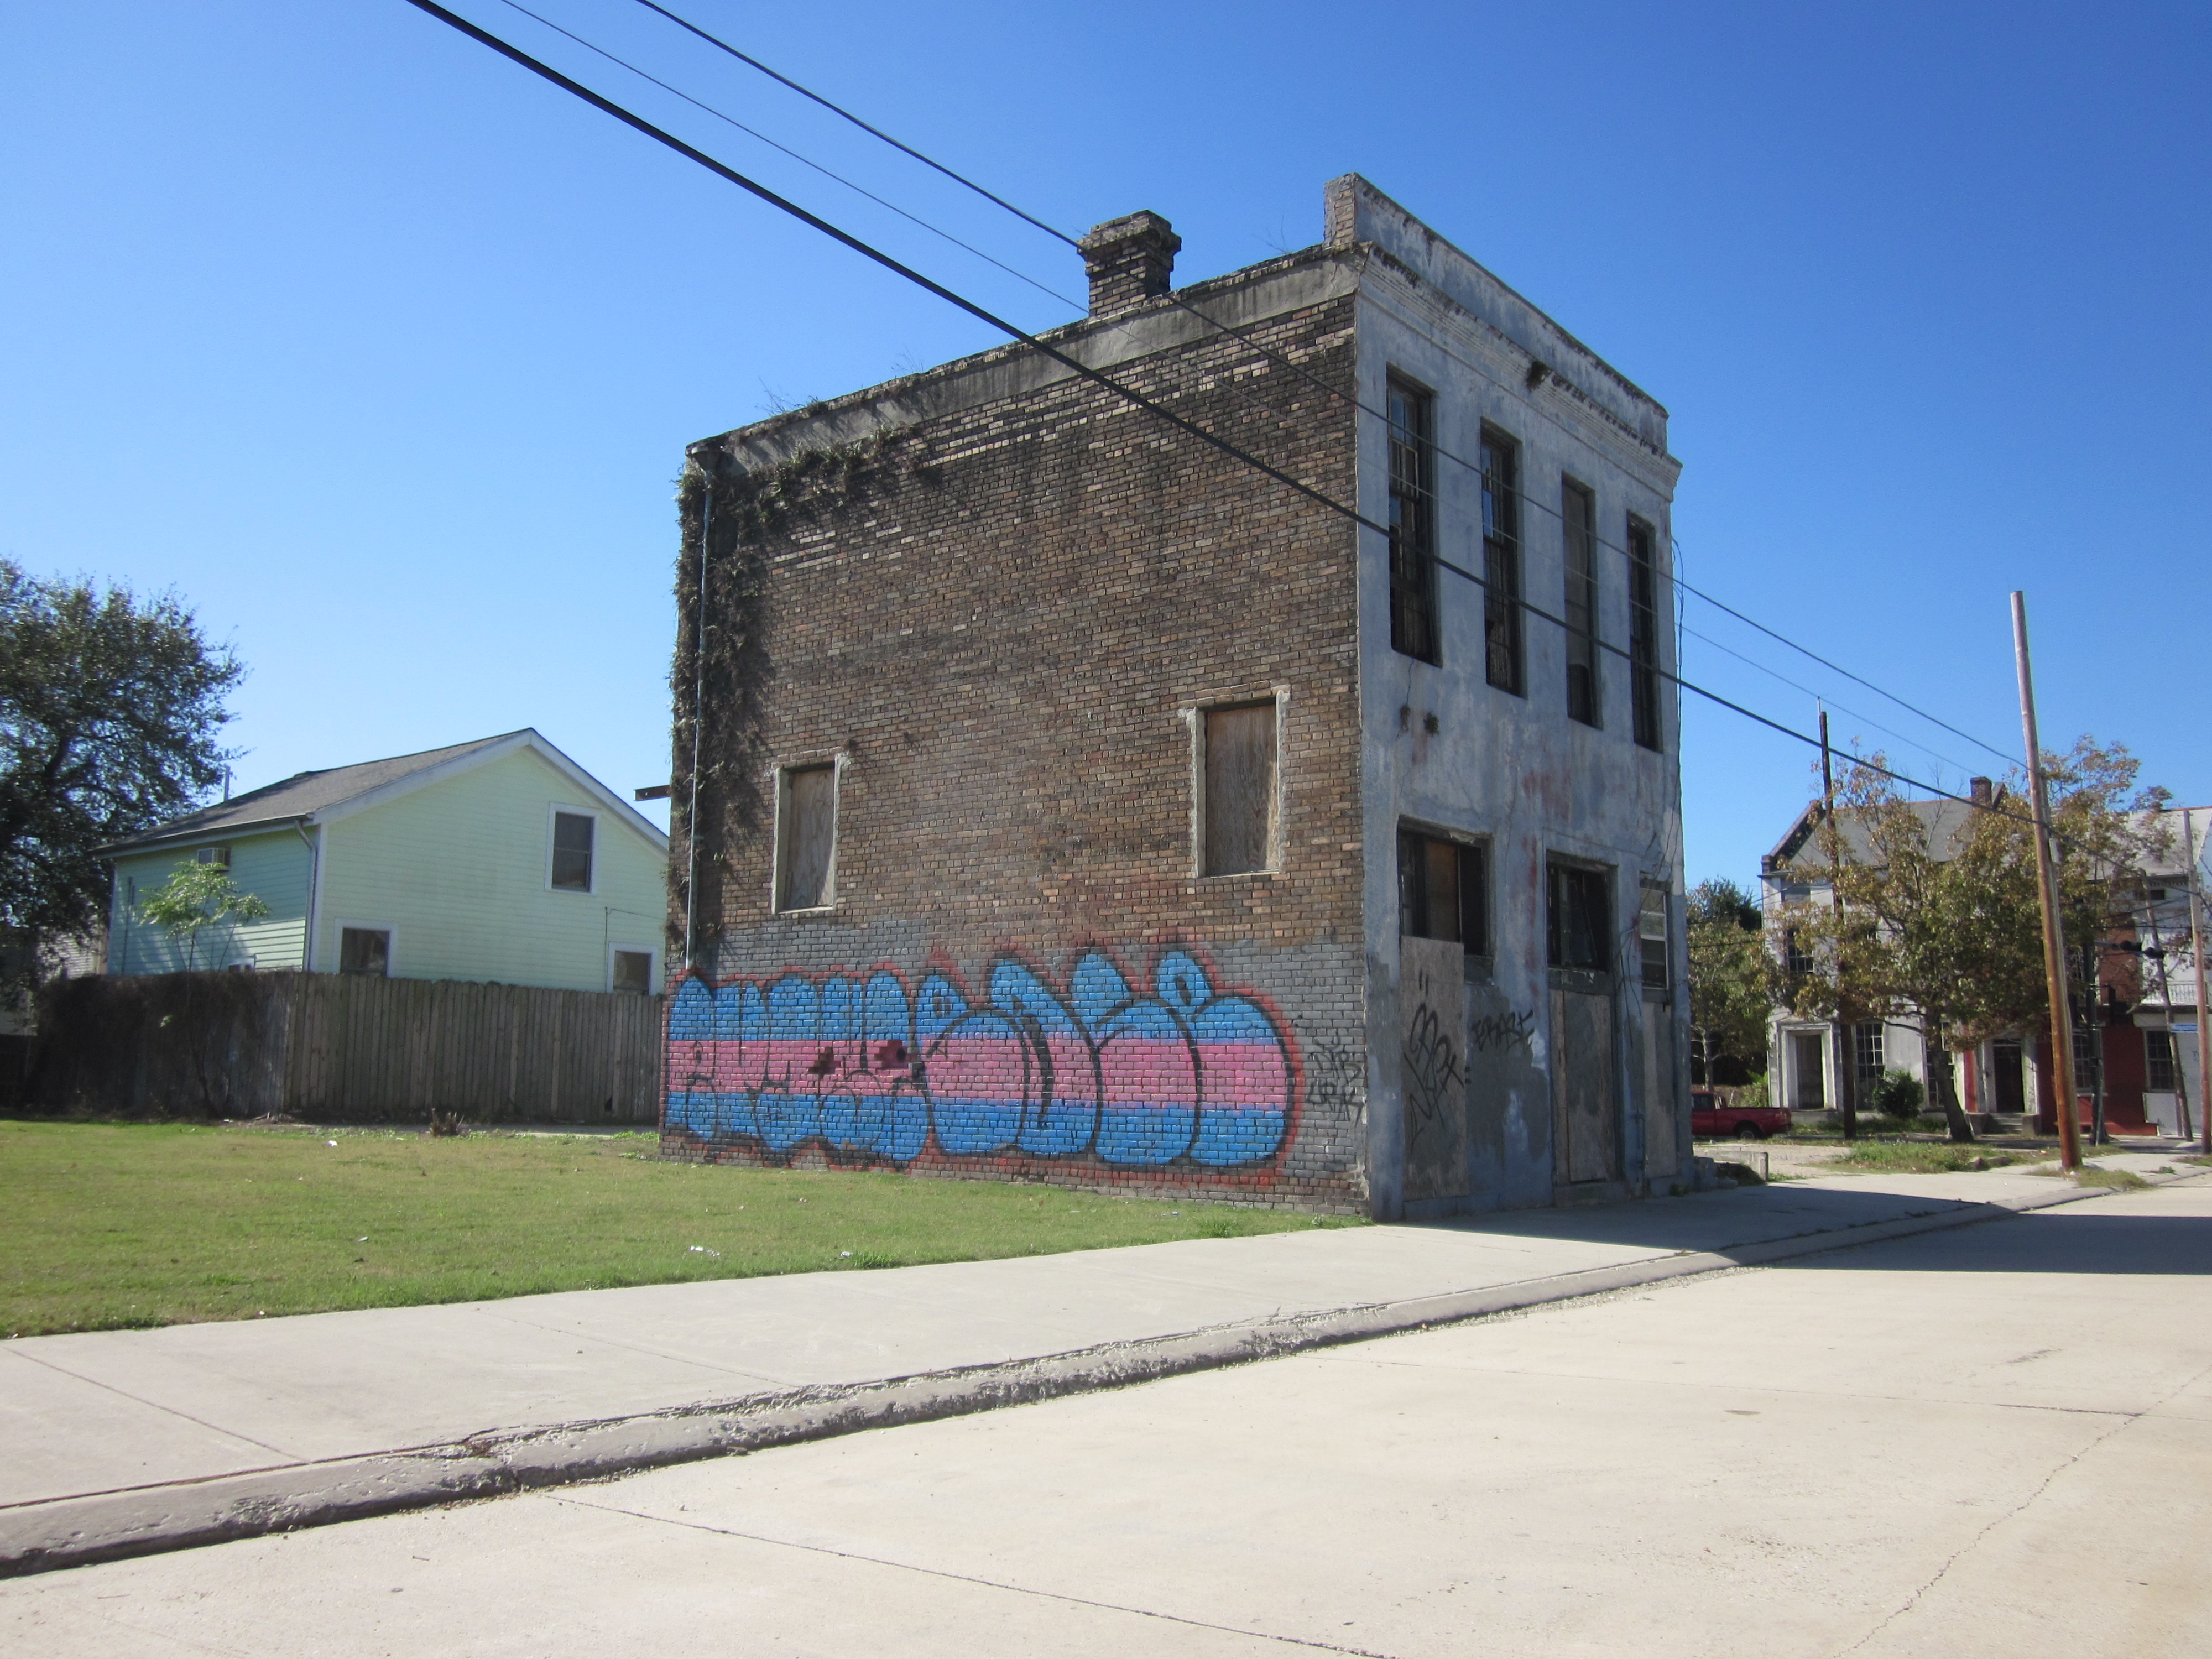 File:Melpomene Brick Building LGD Graffiti.JPG - Wikimedia Commons